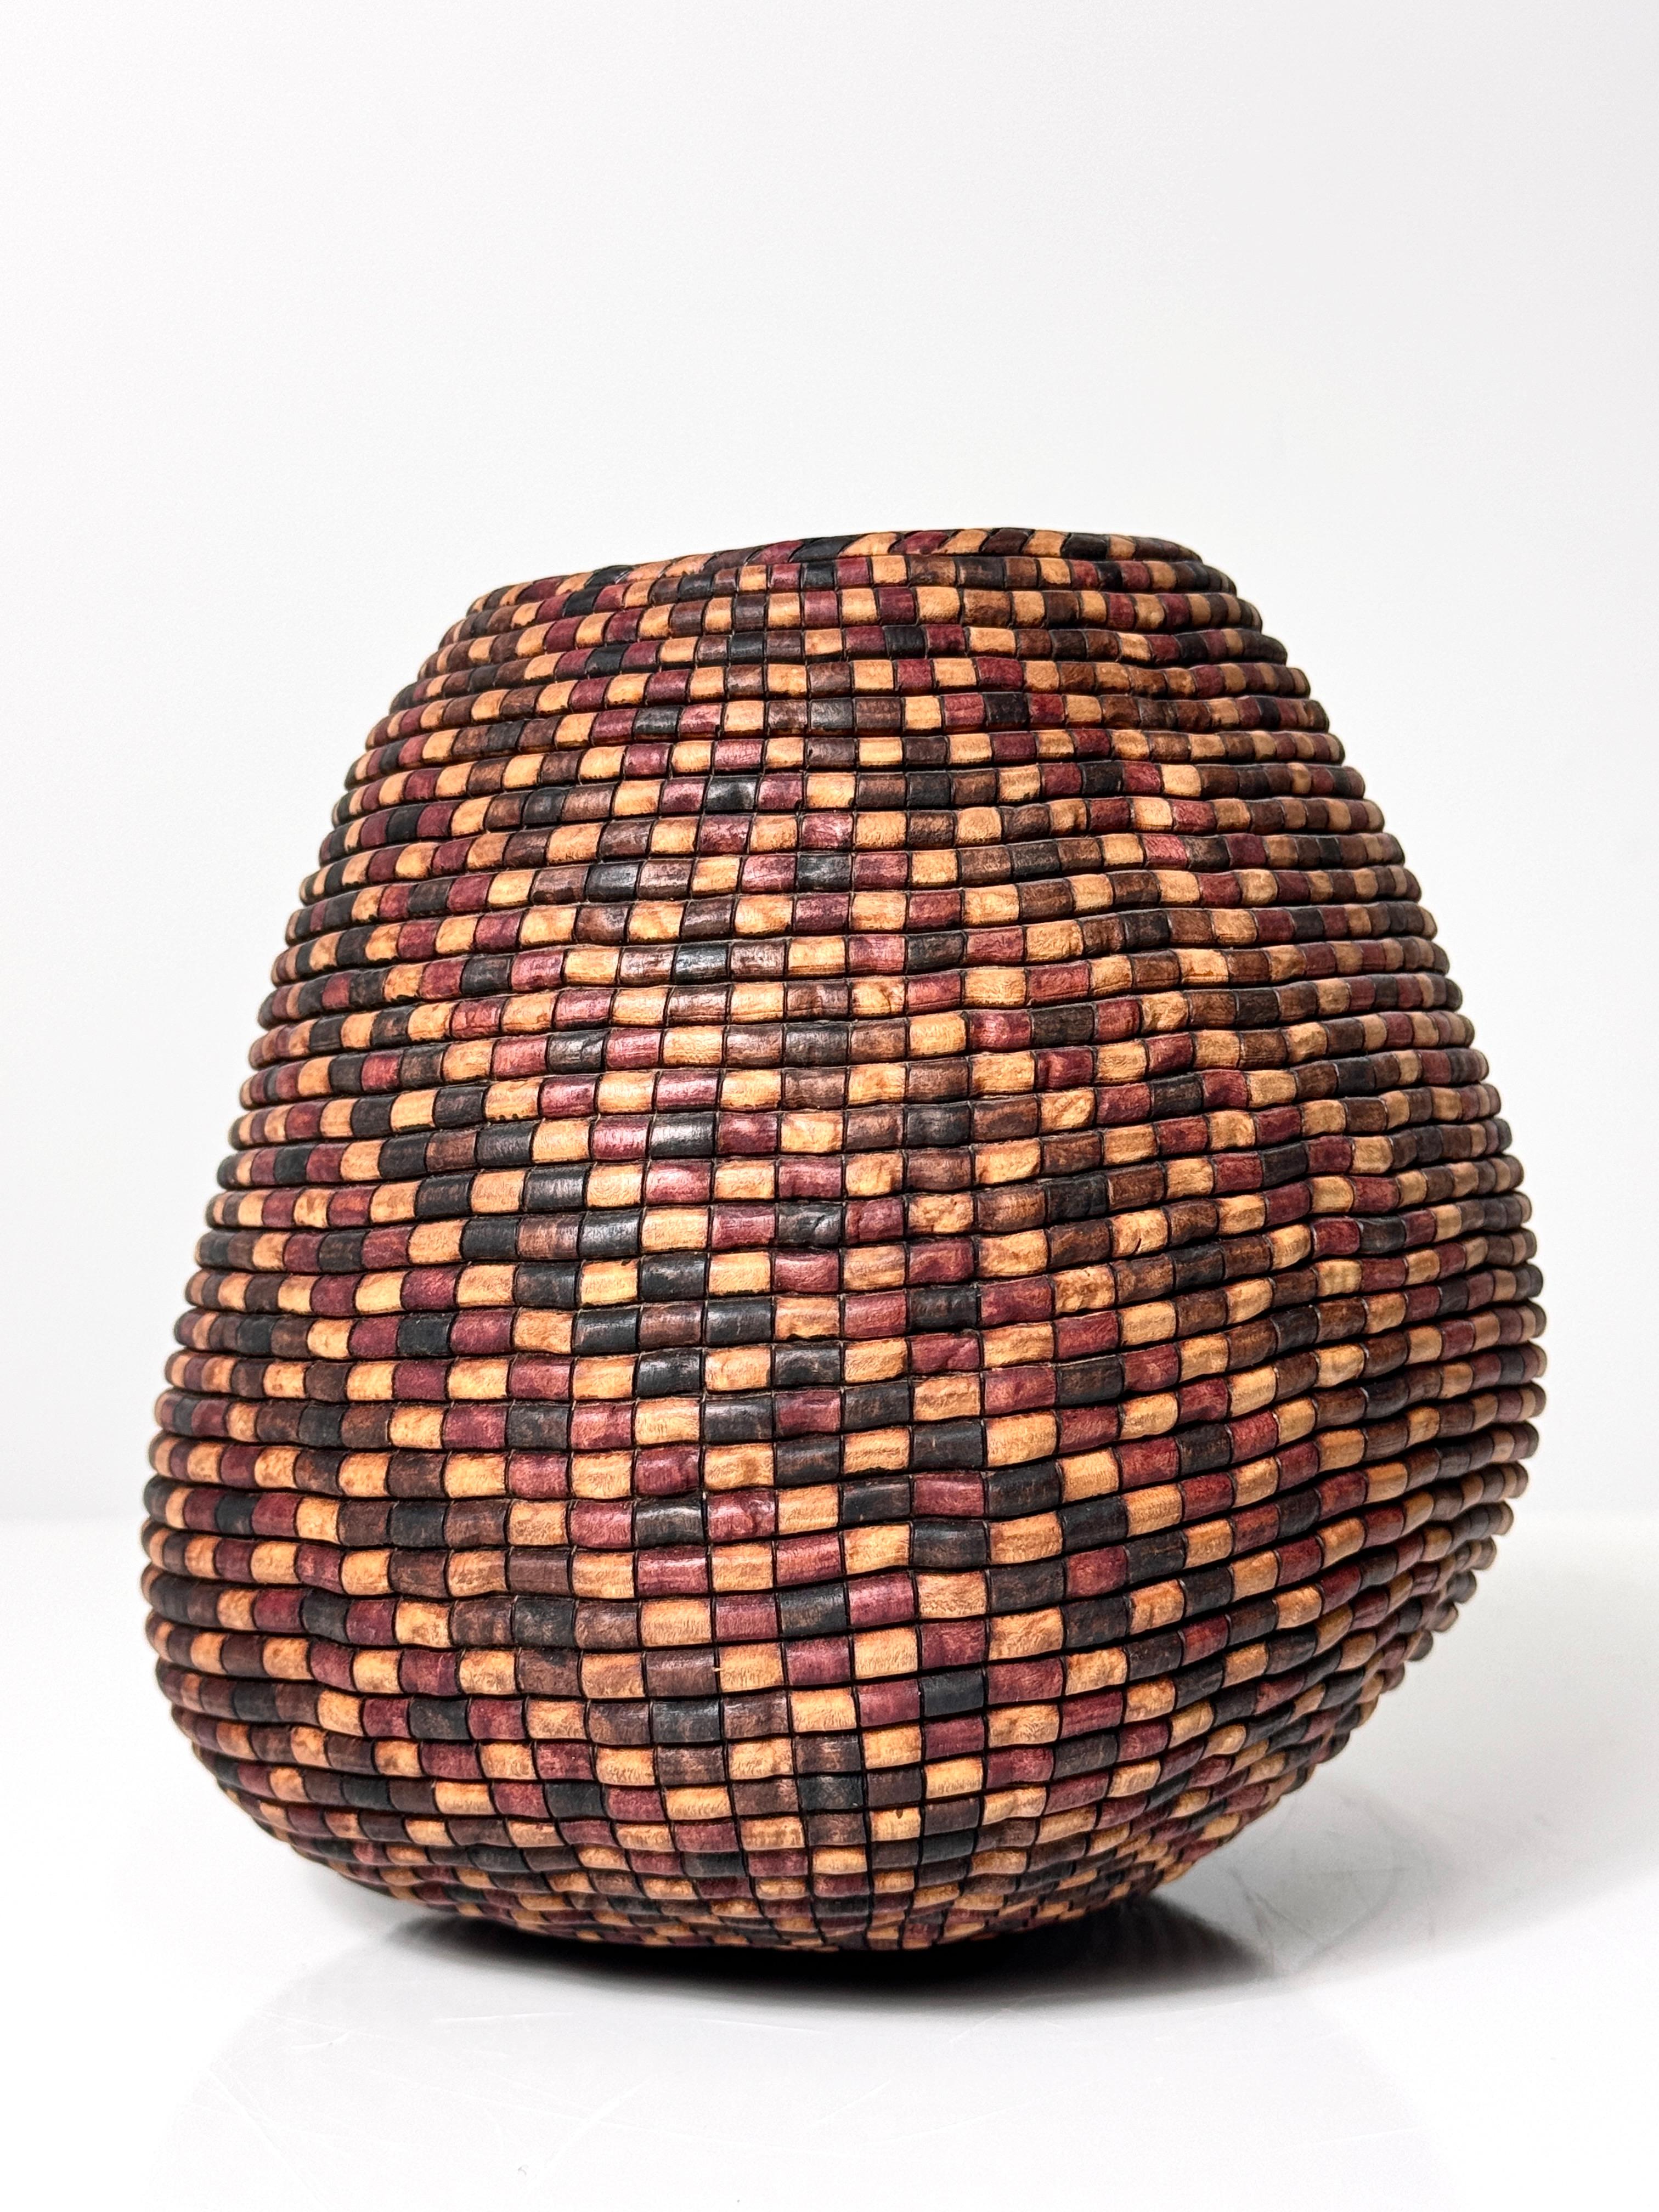 Organic Modern American Studio Turned Wood Basket Illusion Vessel Bowl by David Nittmann 1990s